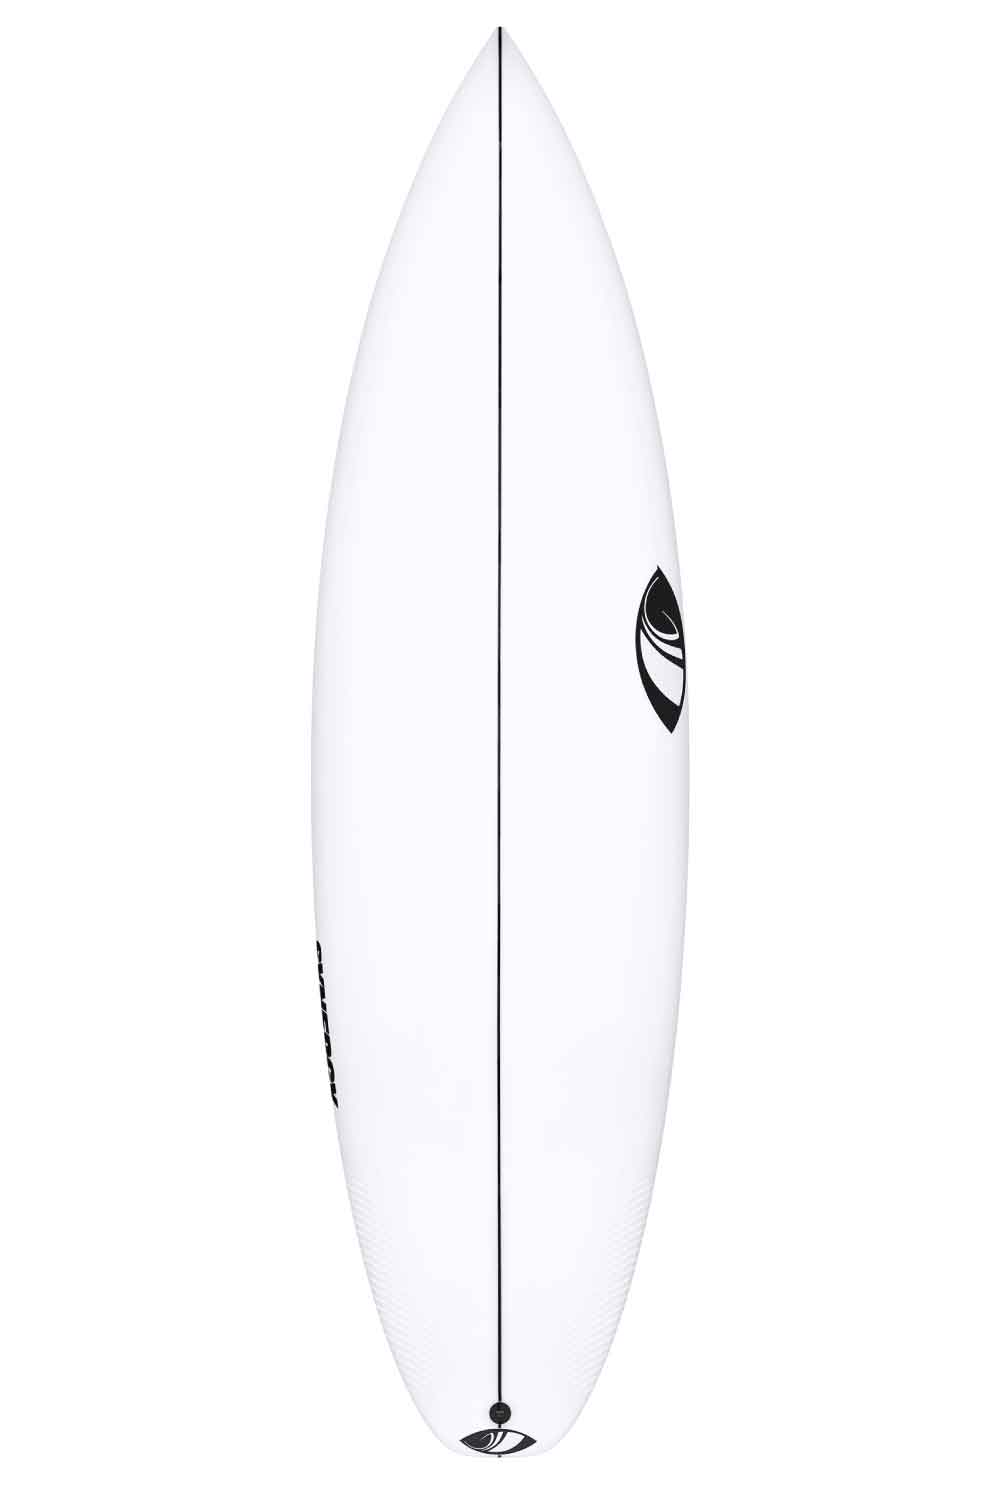 Sharpeye Synergy Surfboard by Jack Robinson - Squash Tail